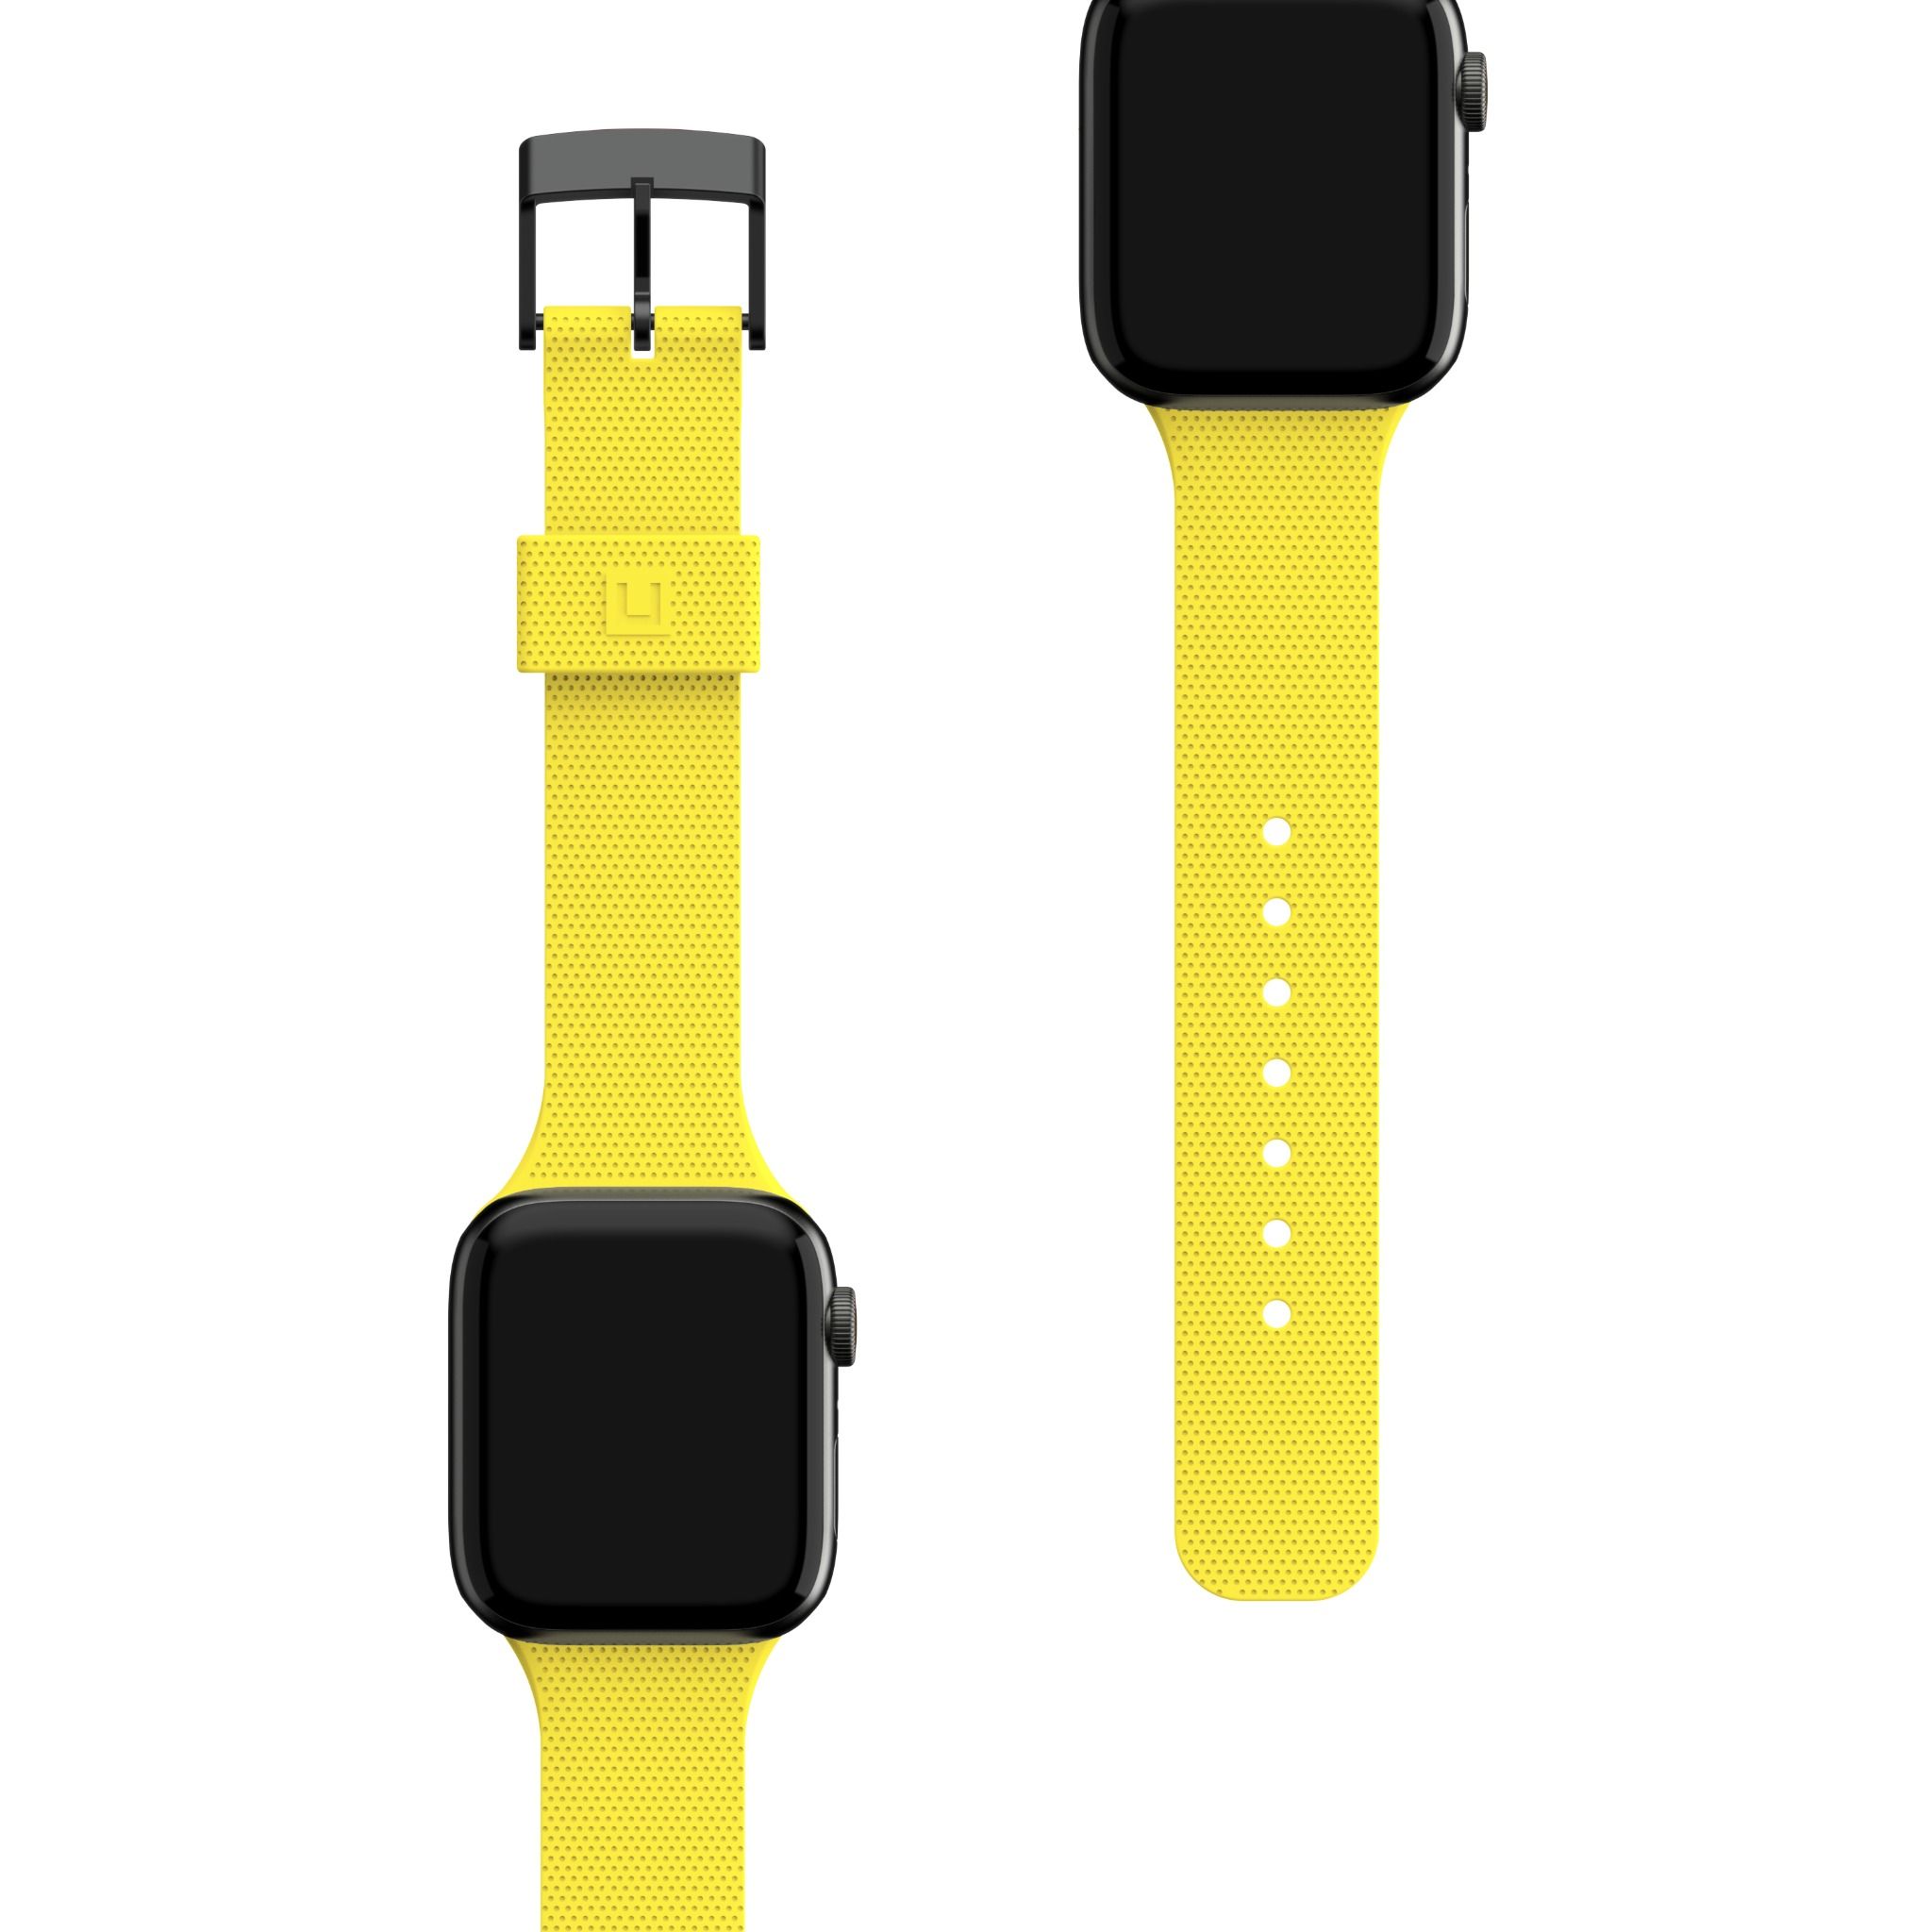  [U] Dây đồng hồ Dot Silicone cho Apple Watch 